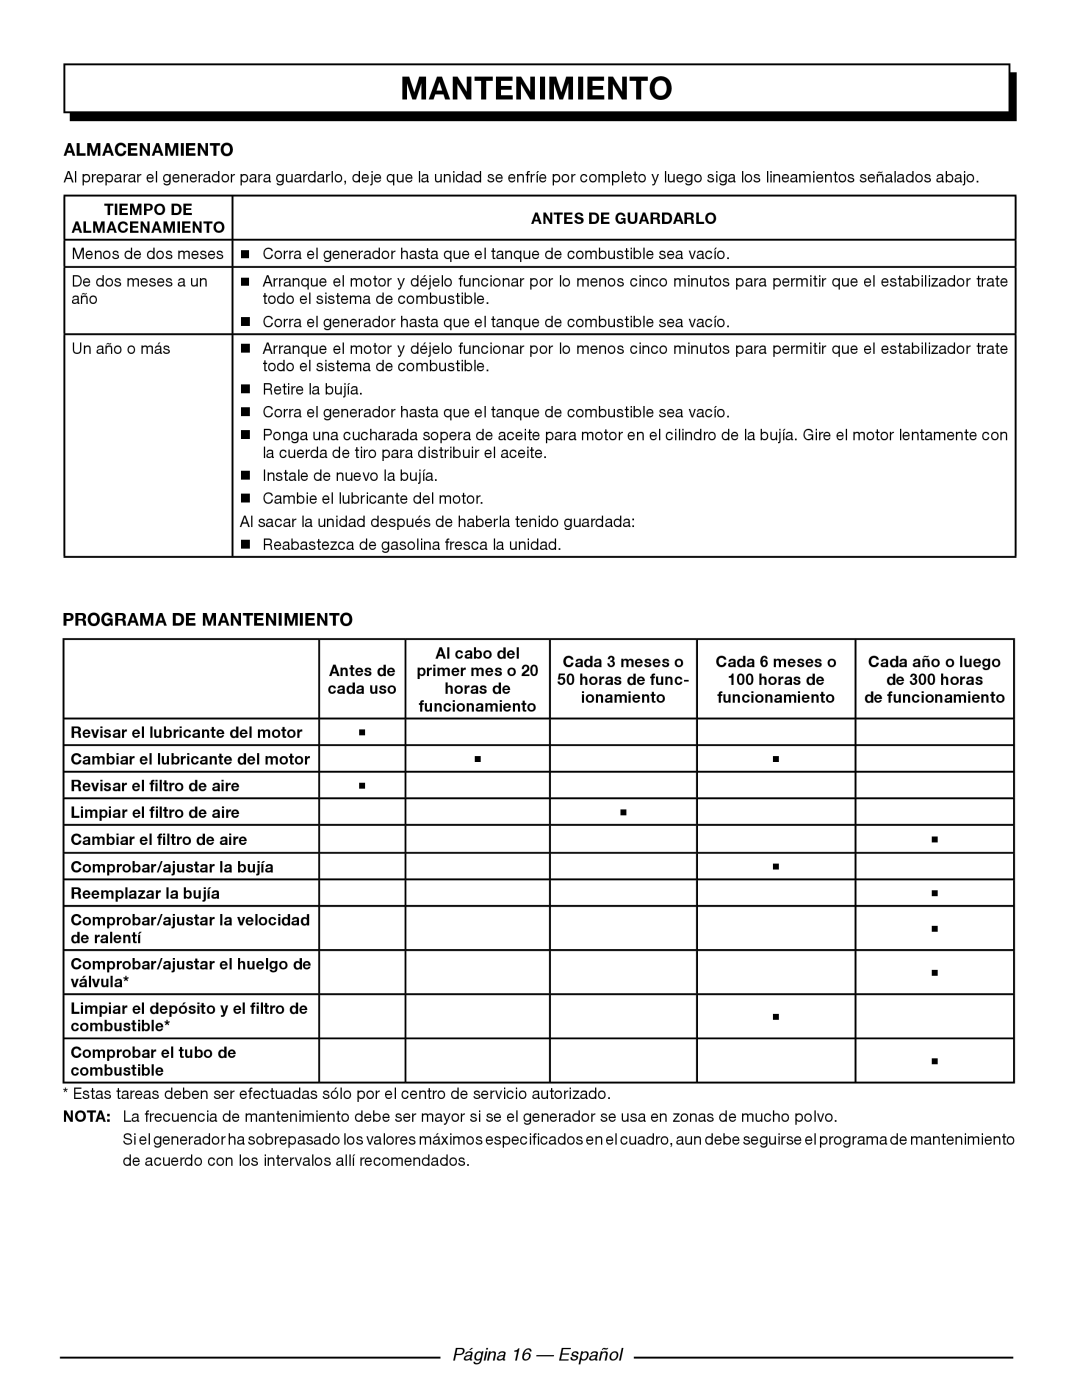 Homelite UT902250 manuel dutilisation Página 16 — Español, Almacenamiento, Programa De Mantenimiento 